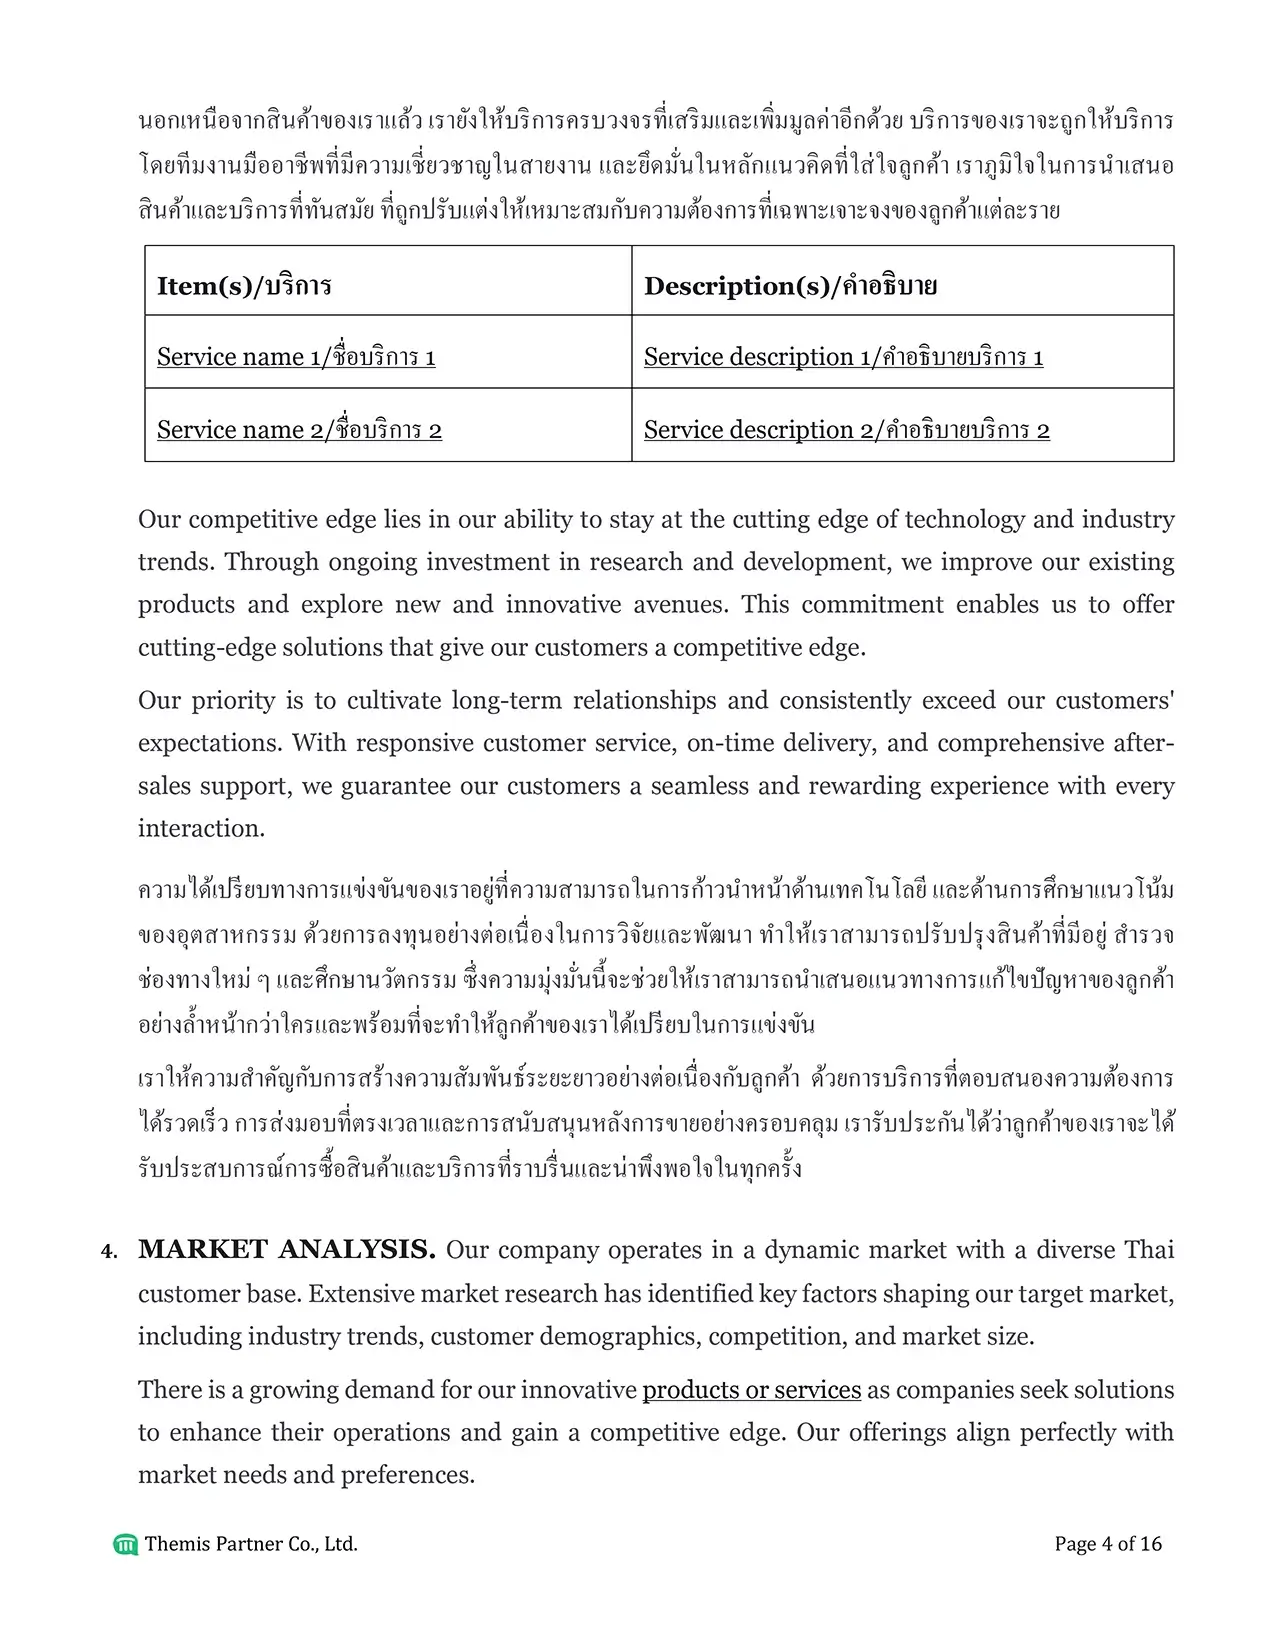 Business plan Thailand 4